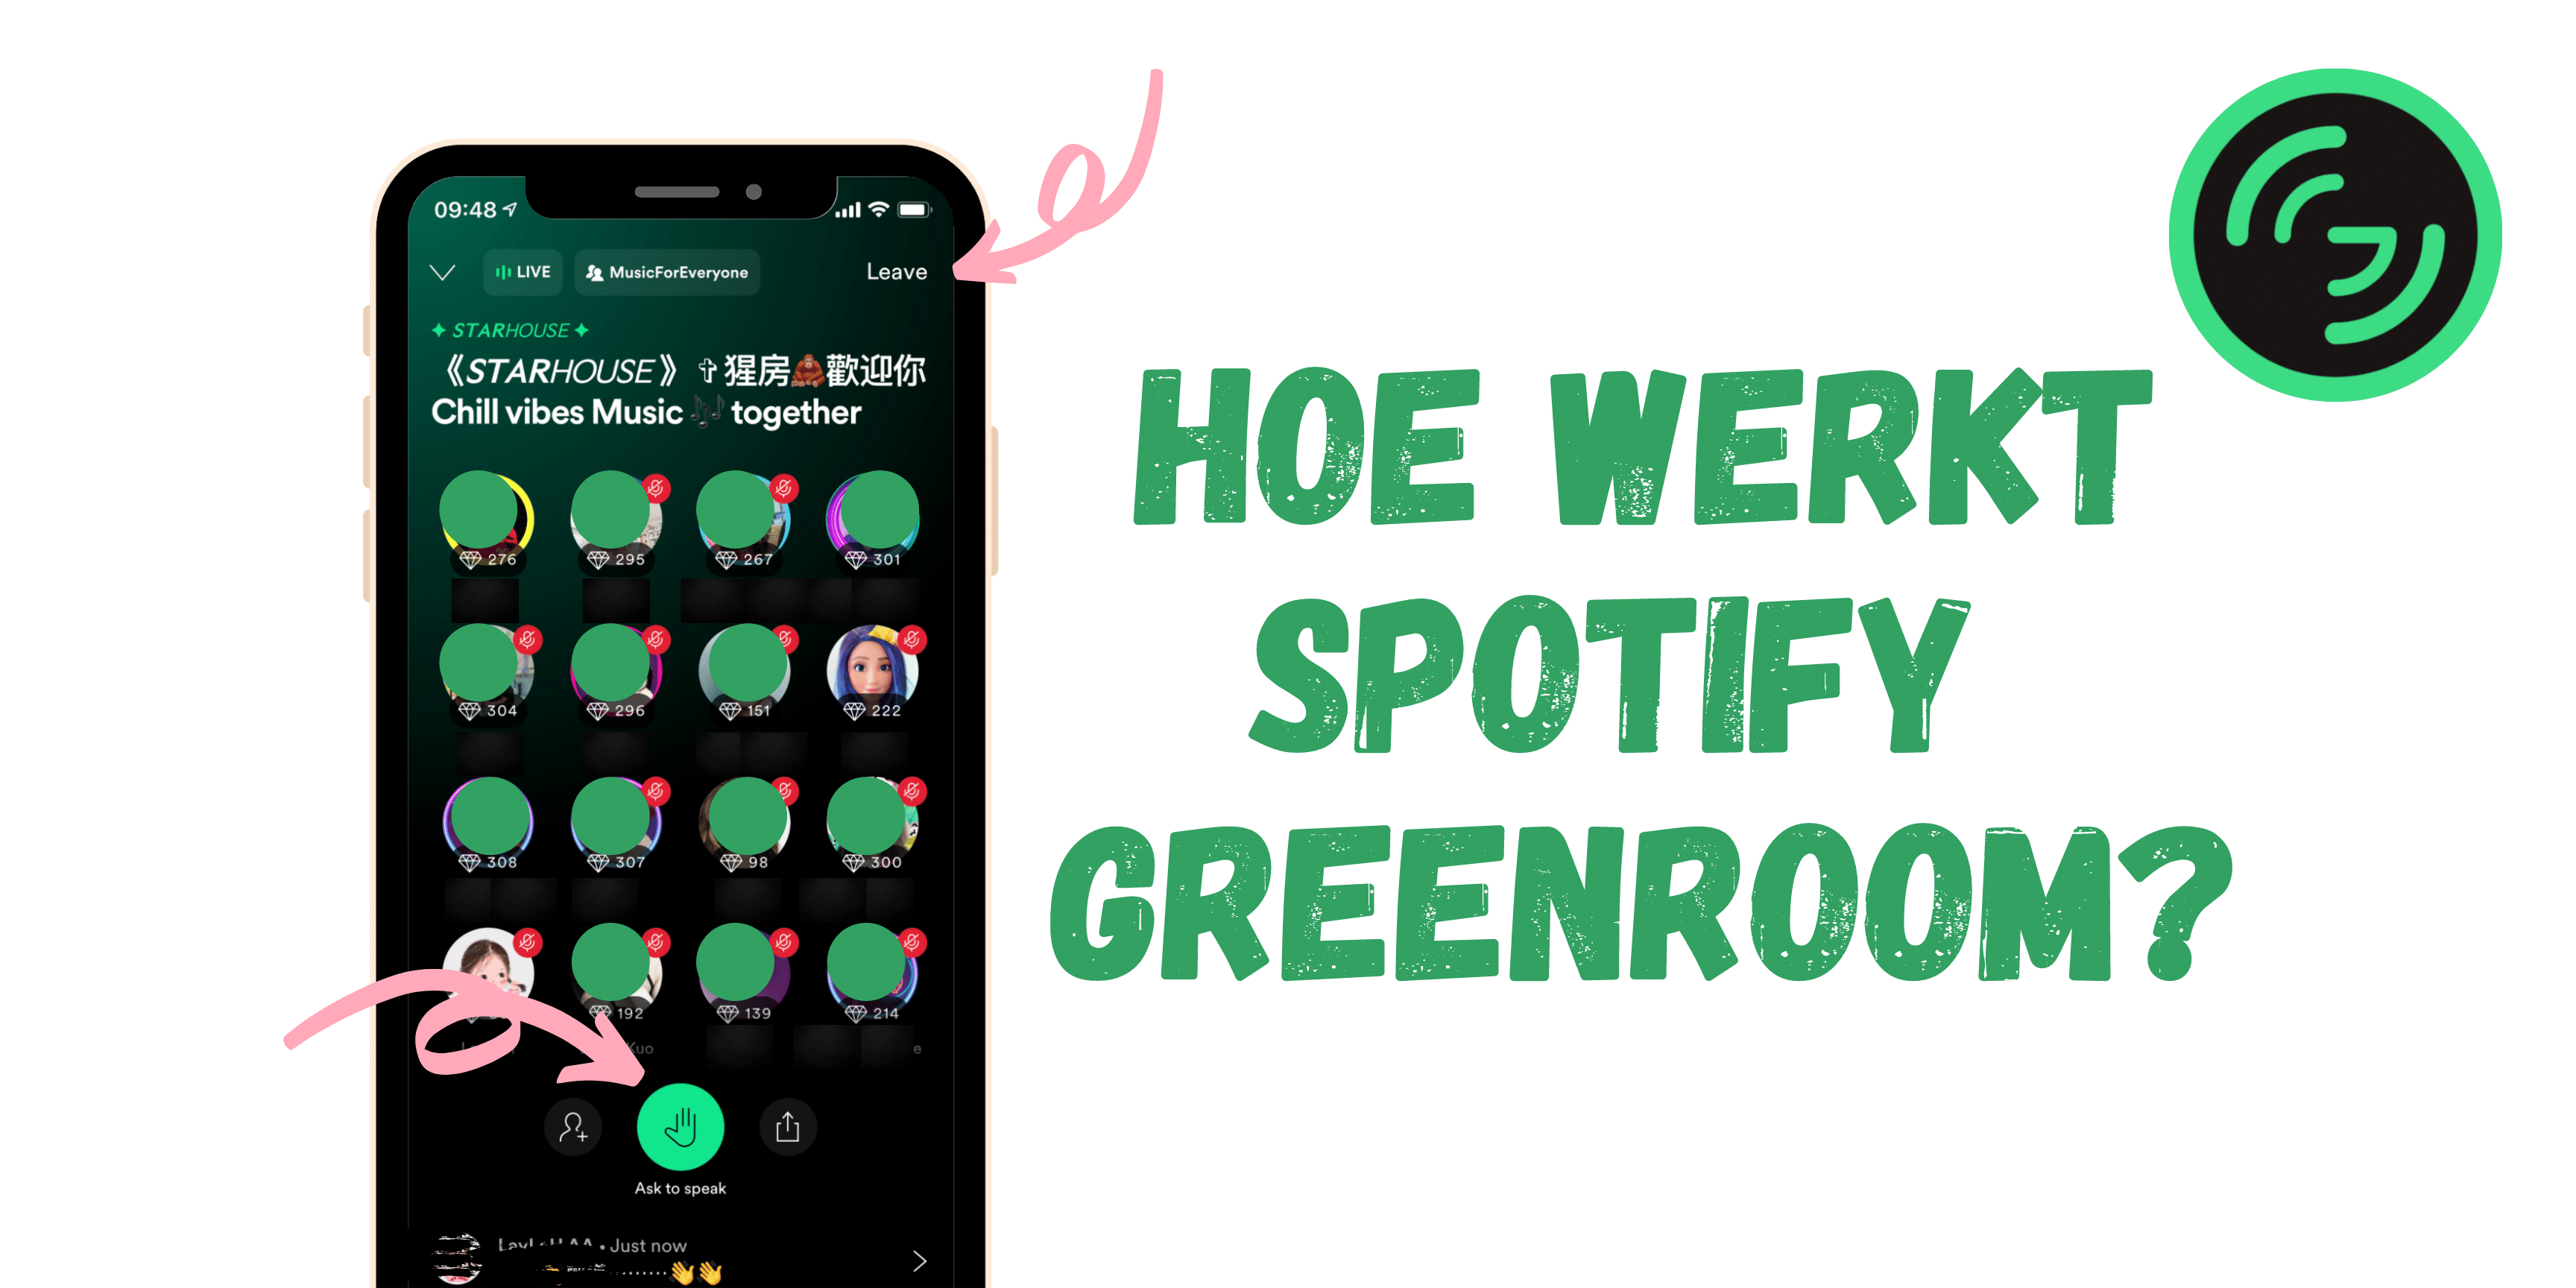 Hoe werkt Spotify Greenroom